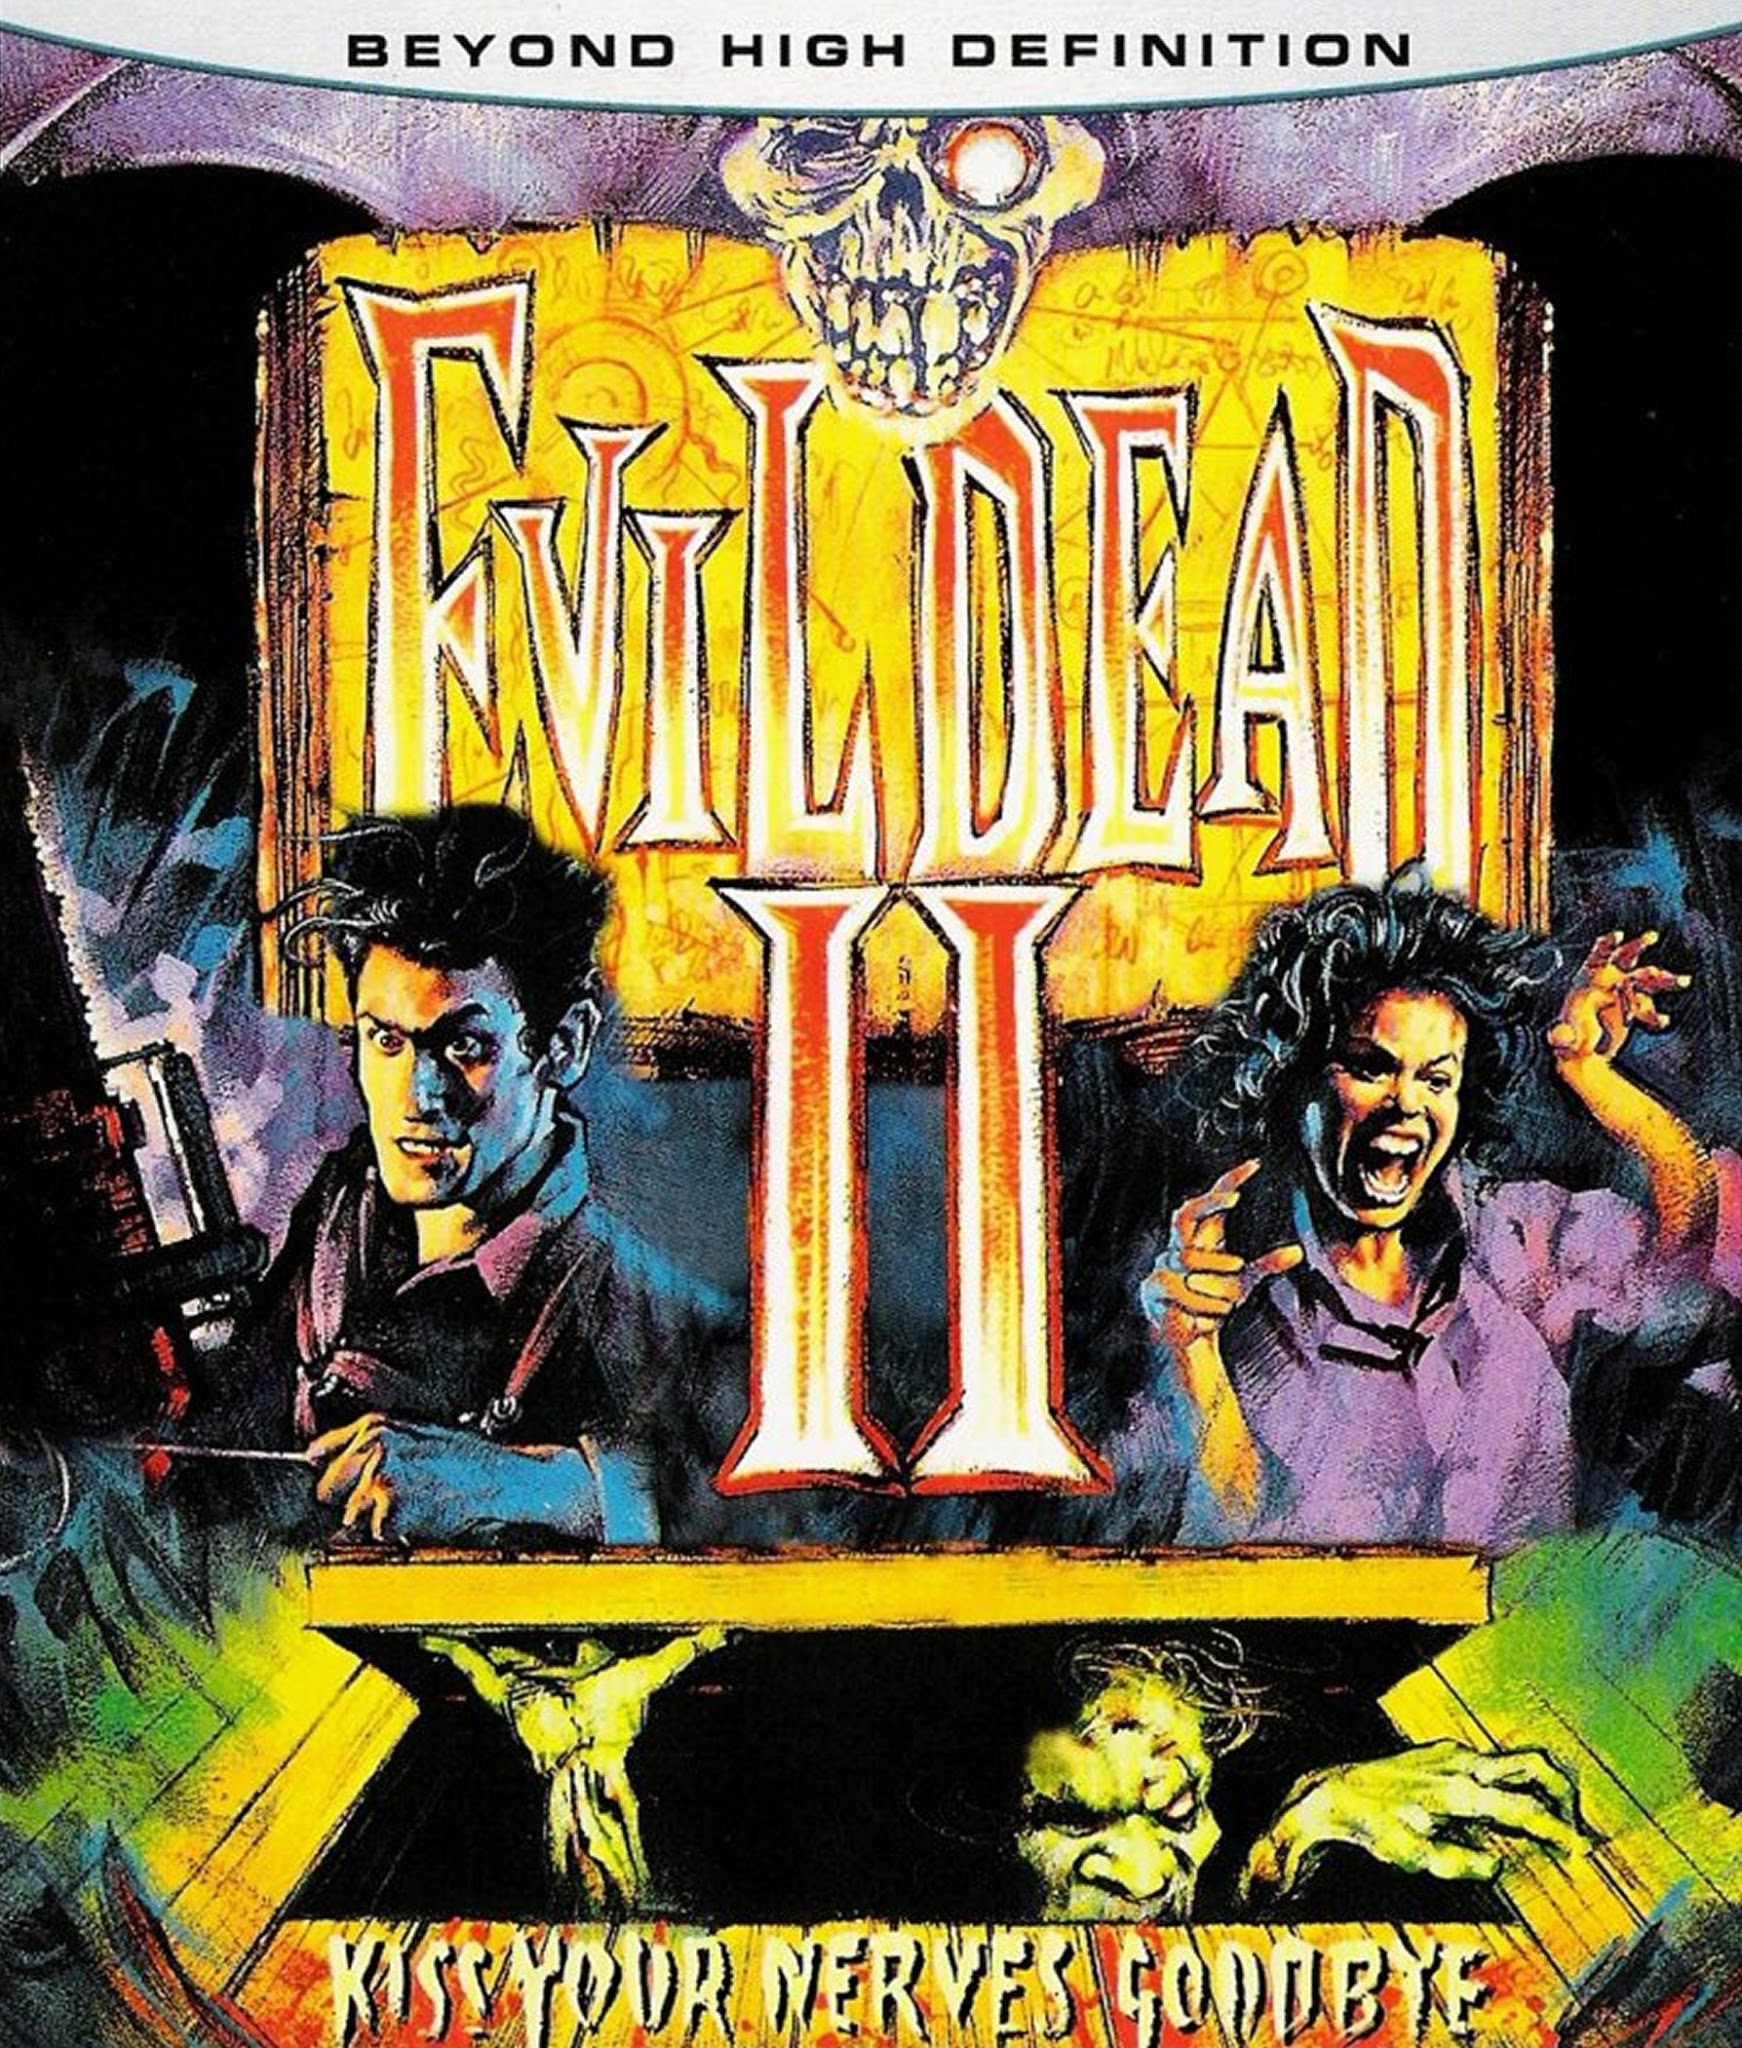 DVD Exotica: The Definitive Evil Dead 1 and 2 (Laserdisc/ DVD/ Blu-ray/ UHD  Comparison)